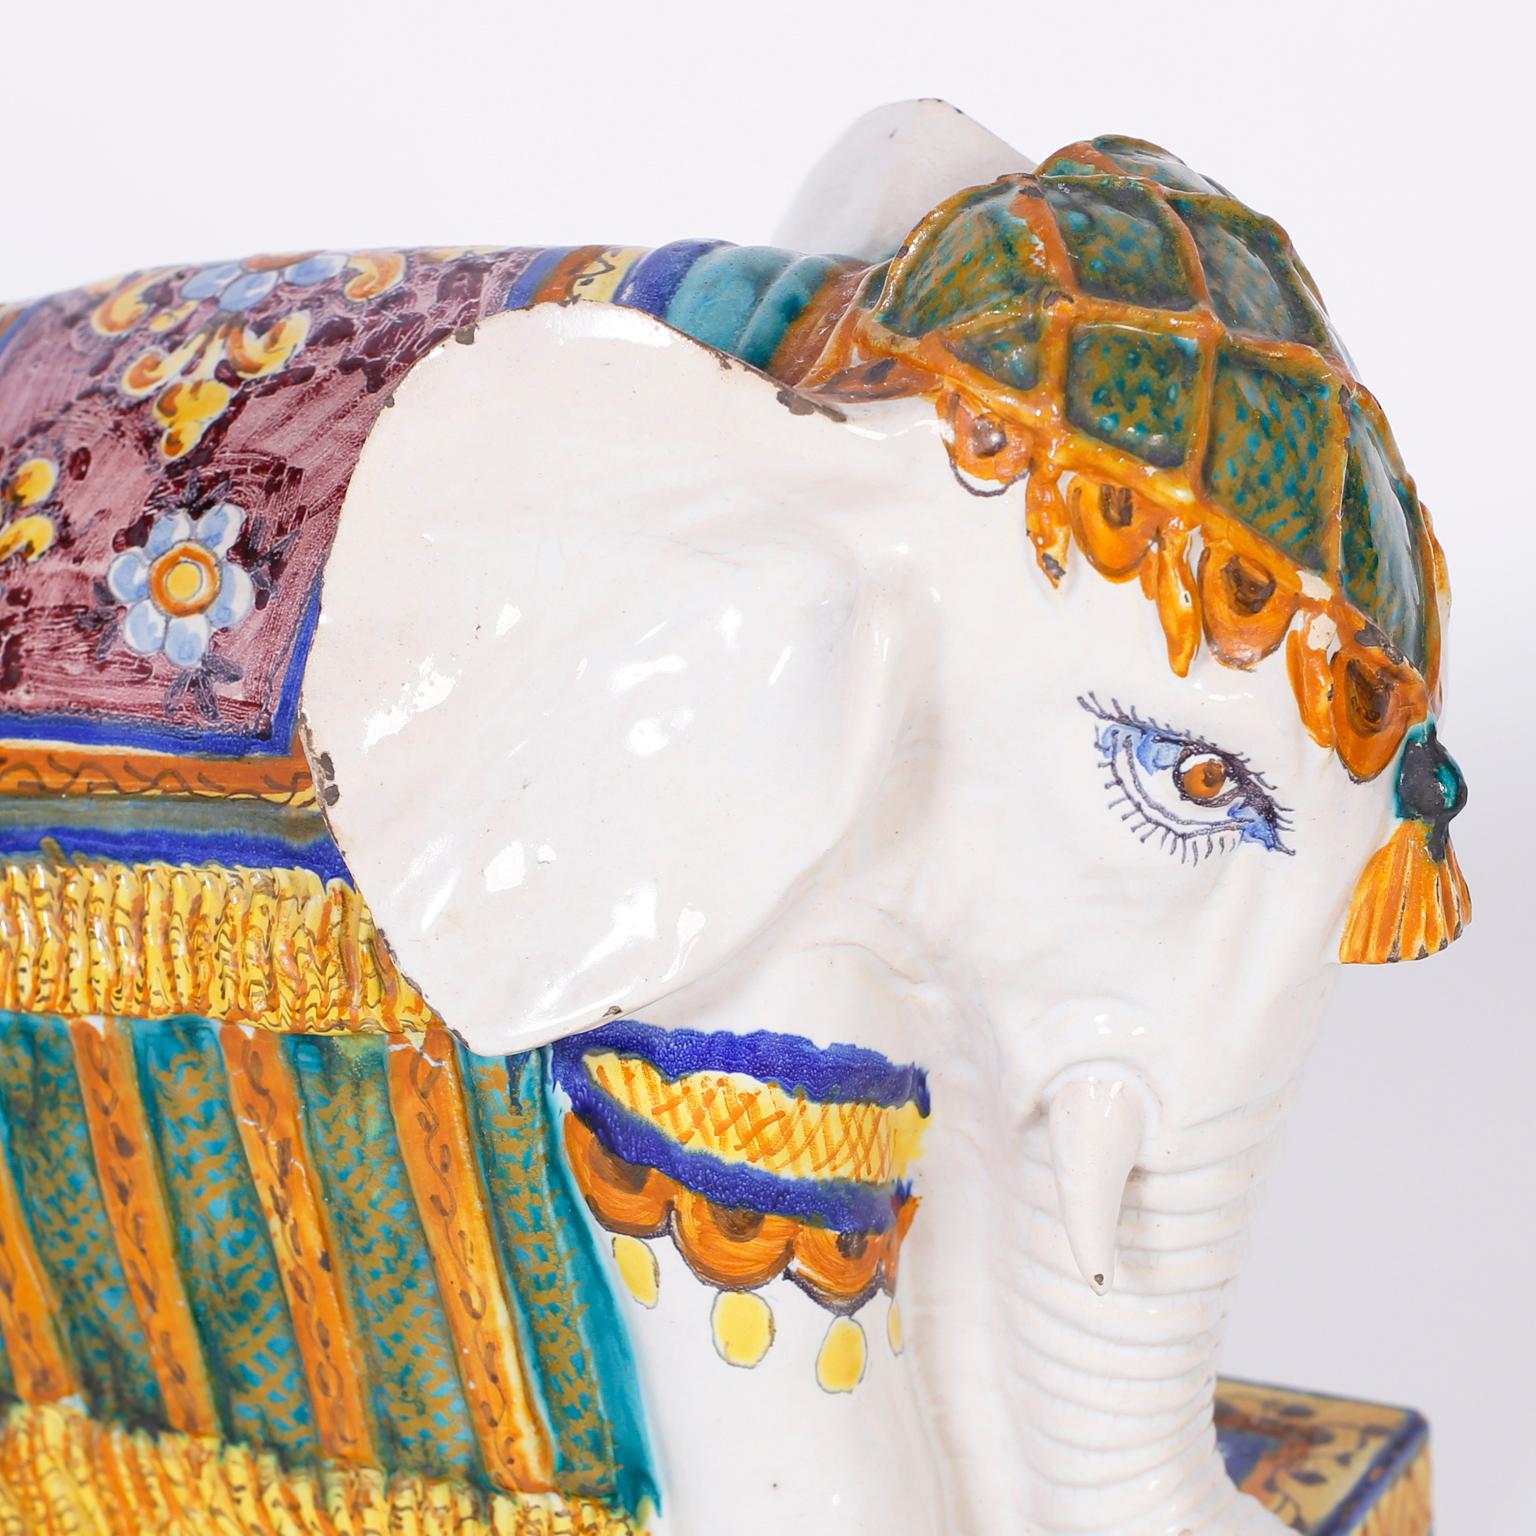 Pair of Terracotta Elephants Ornaments 2